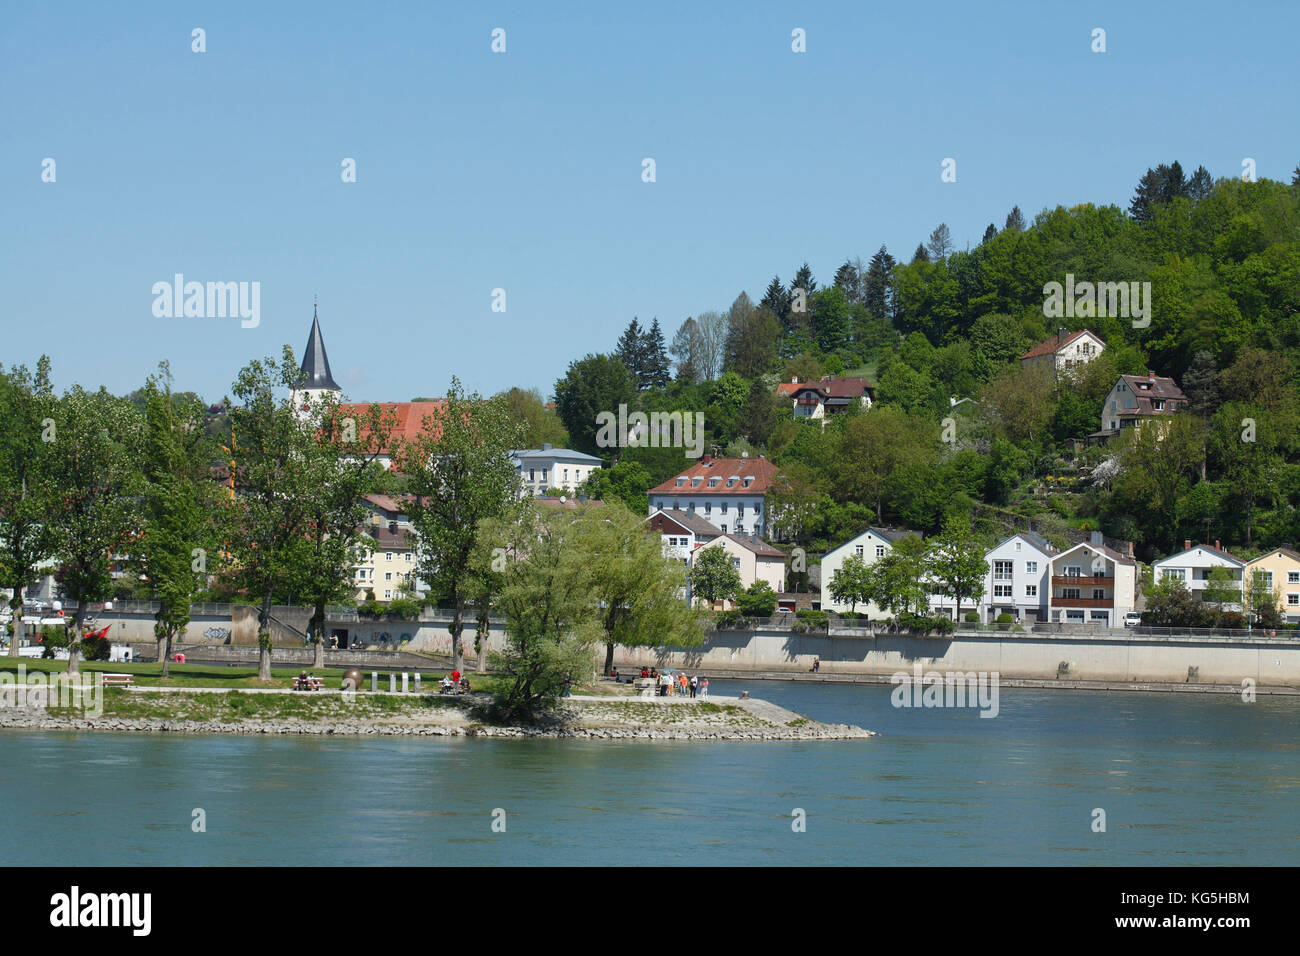 Drei-Flüsse-Eck, confluence of Danube, Inn and Ilz, Old Town, Passau, Lower Bavaria, Bavaria, Germany, Europe, Stock Photo